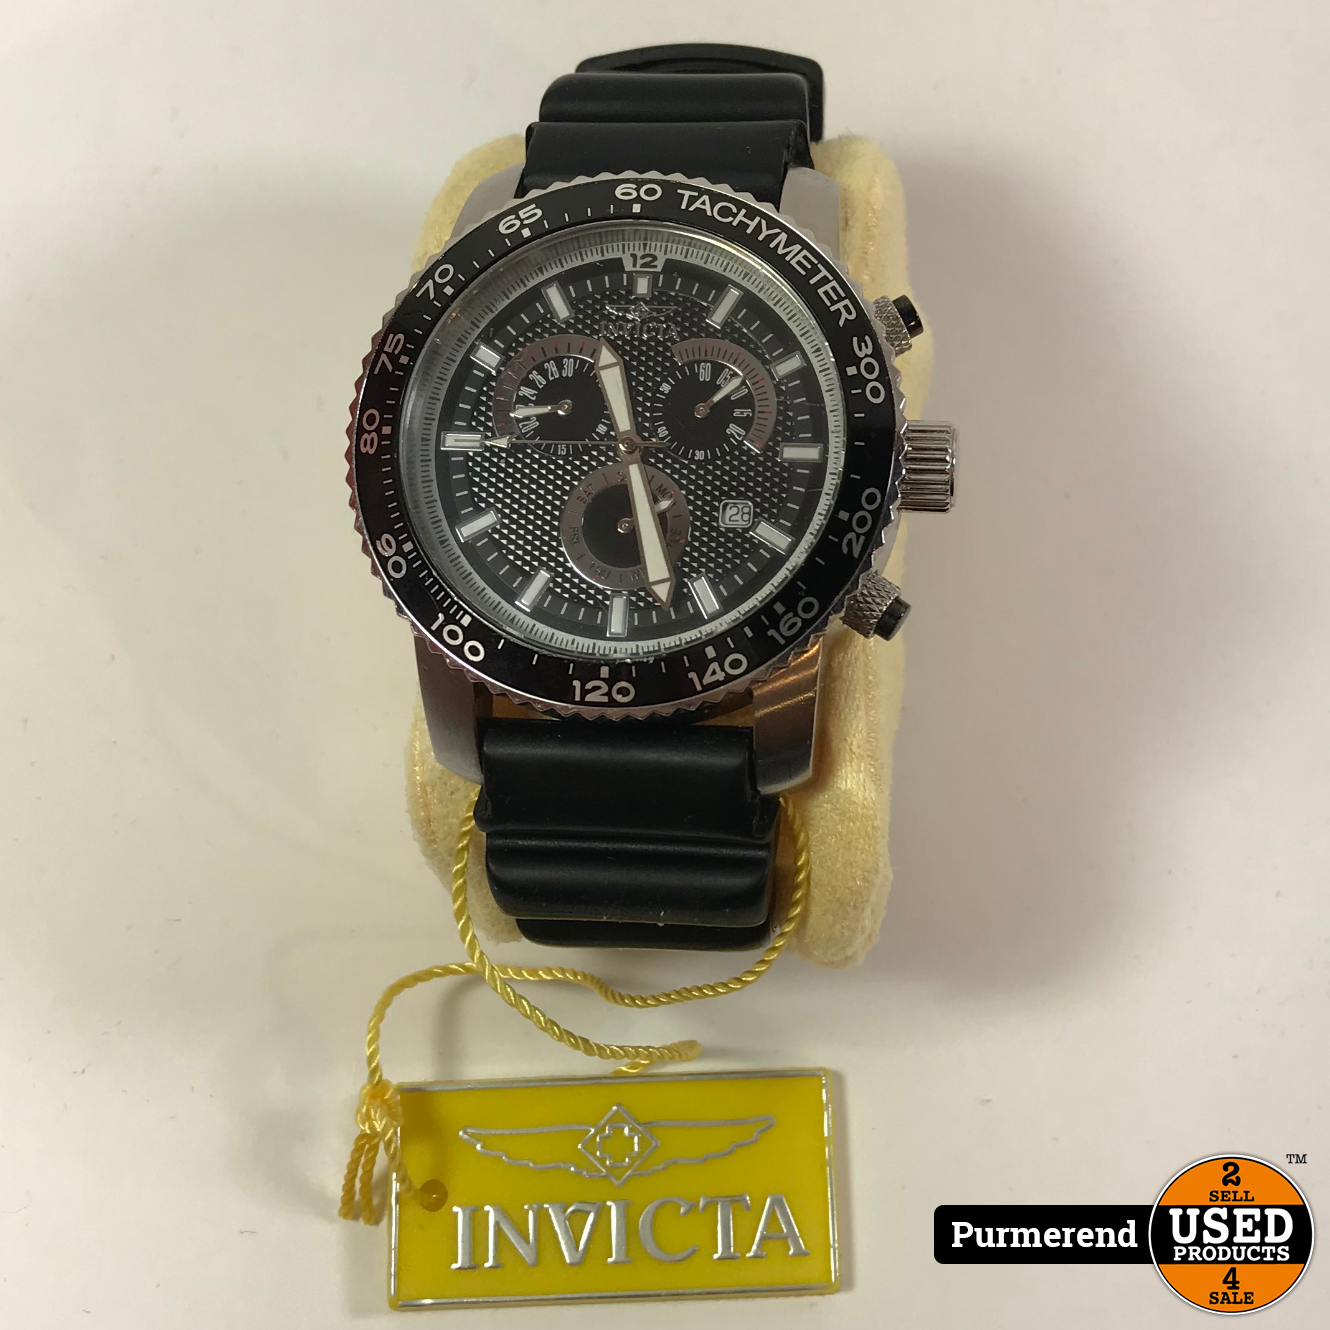 Invicta 11291 Horloge | Gebruikt - Used Products Purmerend